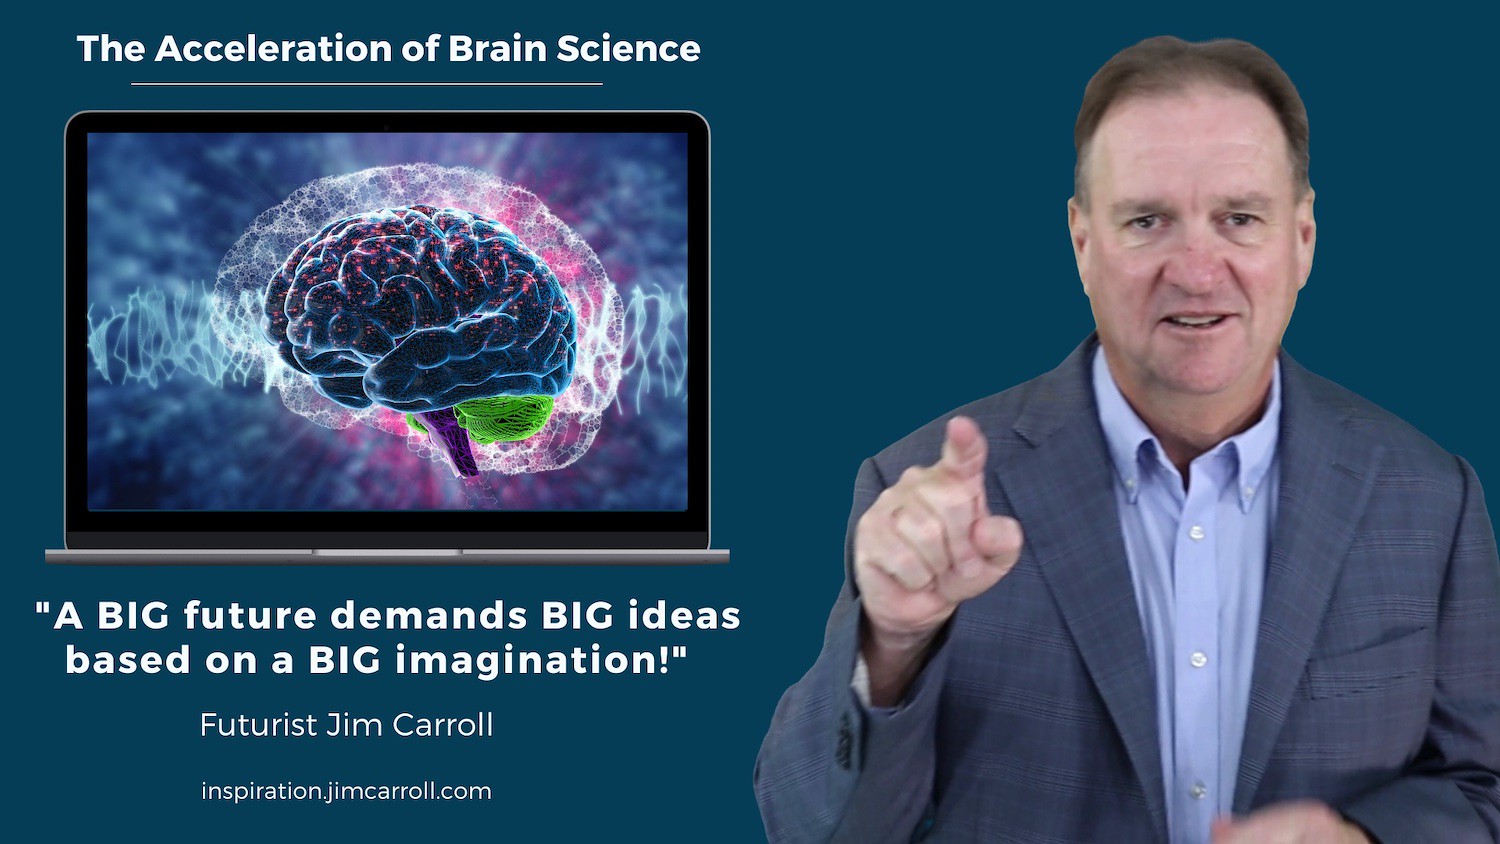 "A BIG future demands BIG ideas based on a BIG imagination!" - Futurist Jim Carroll